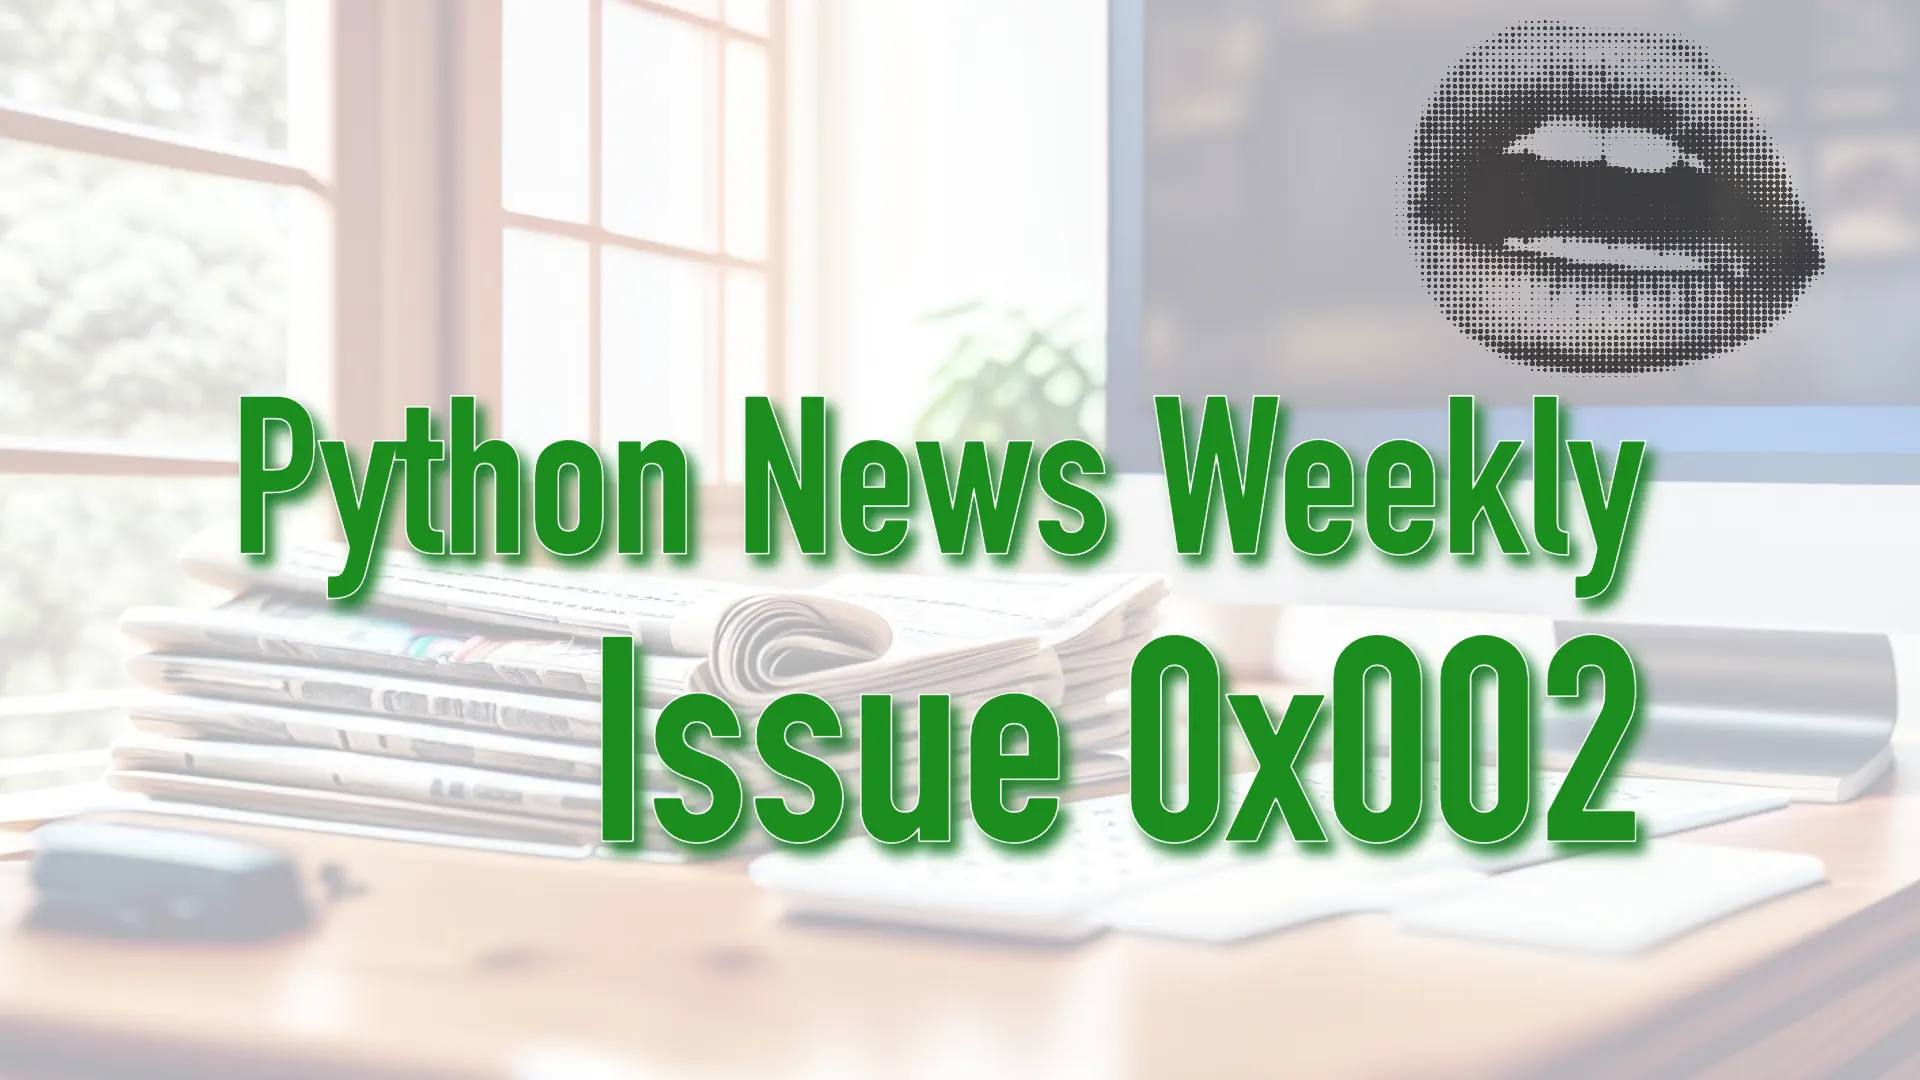 /news/weekly/0x002/python-weekly-newsletter-0x002.webp